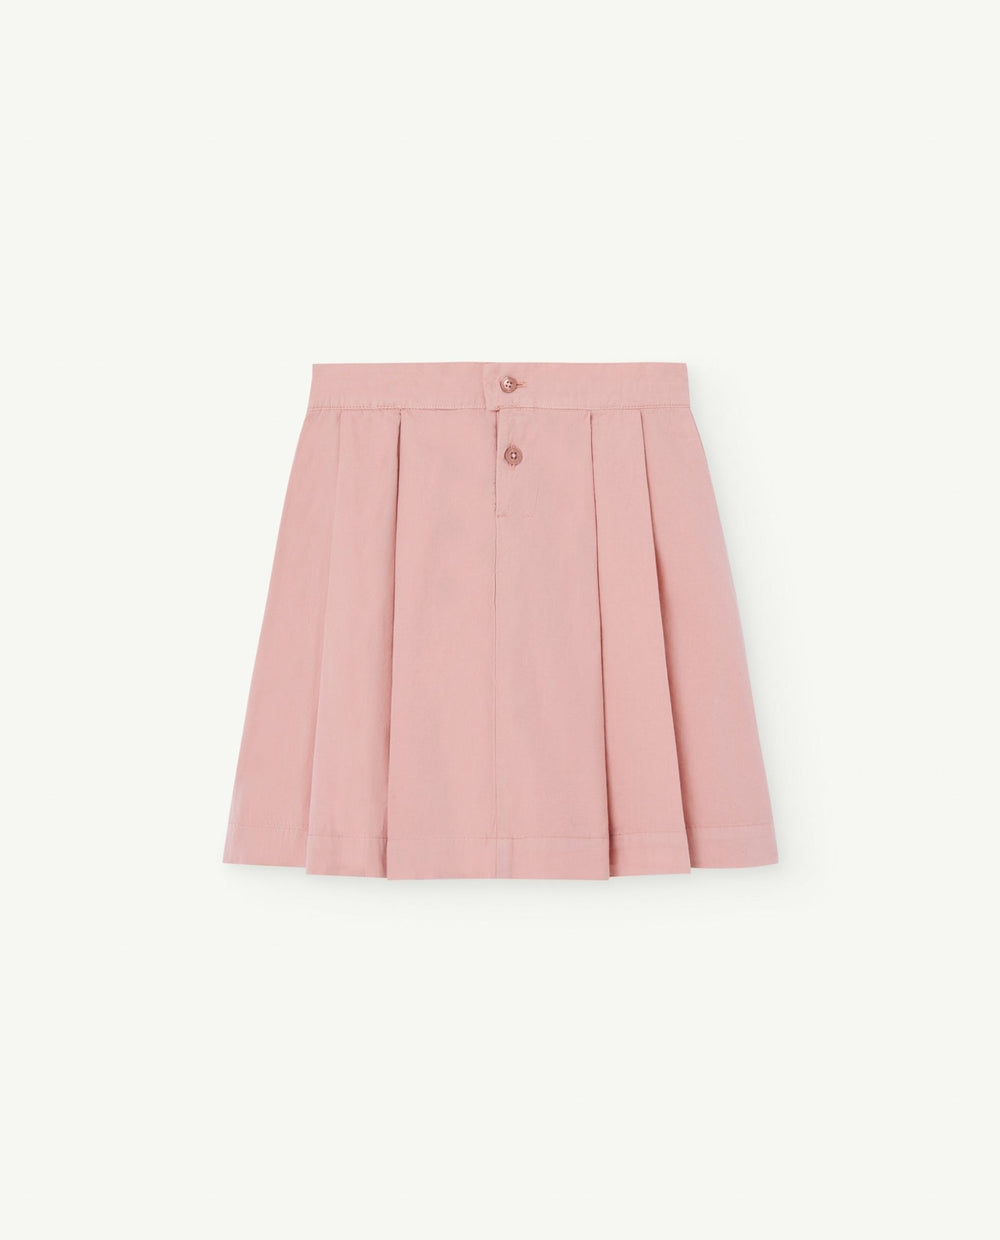 Turkey Skirt - CE Pink - Posh New York